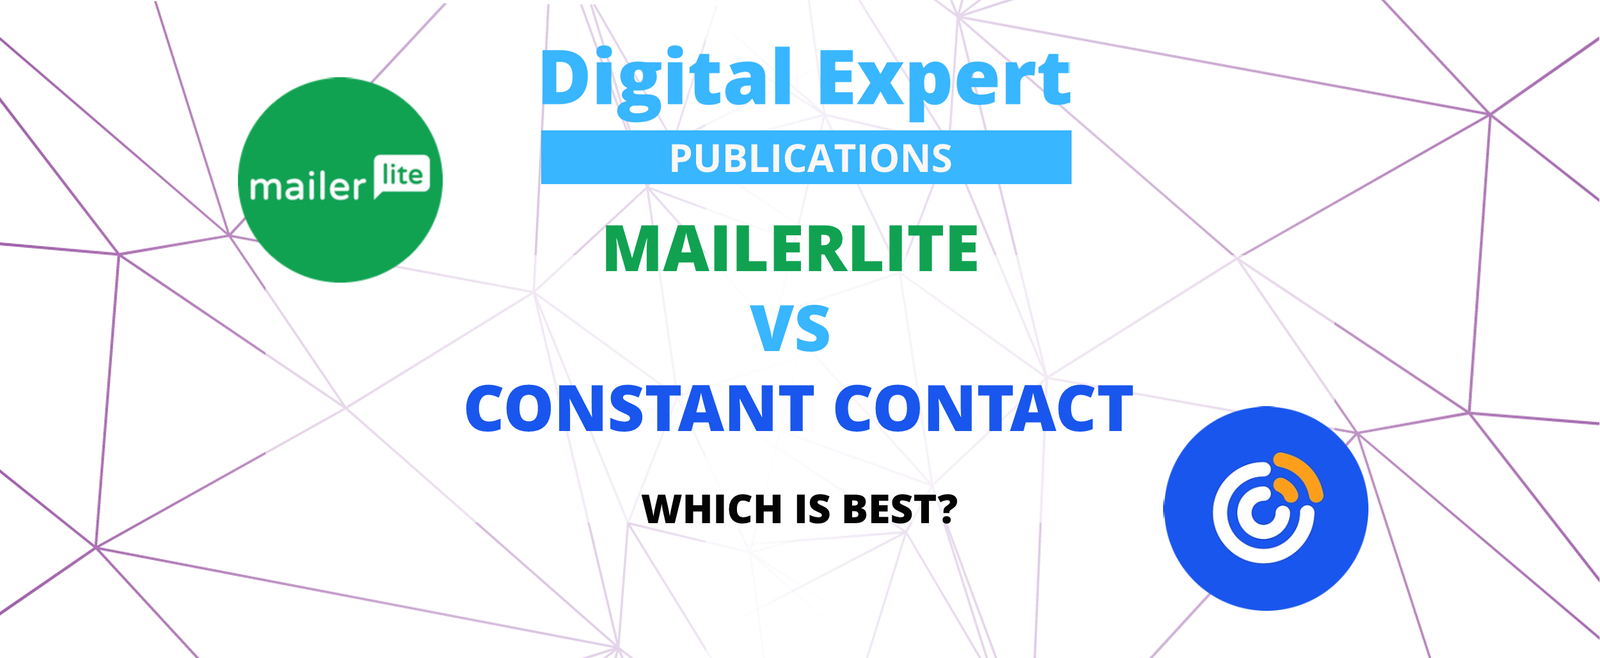 Mailerlite vs Constant Contact. Which is Best? Service comparison - Digital Expert